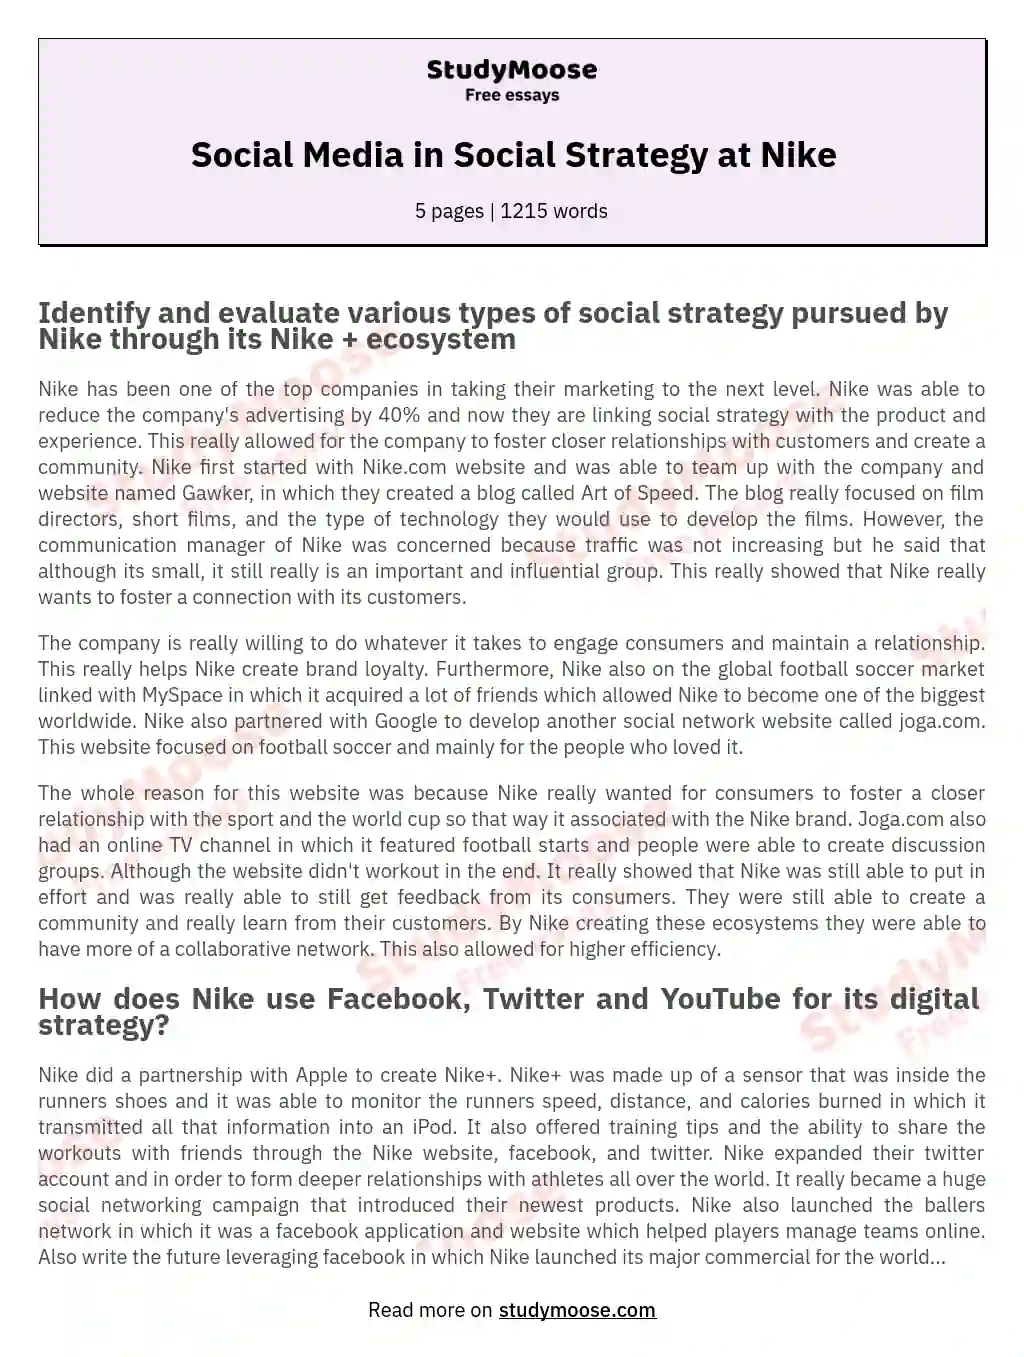 Social Media in Social Strategy at Nike essay